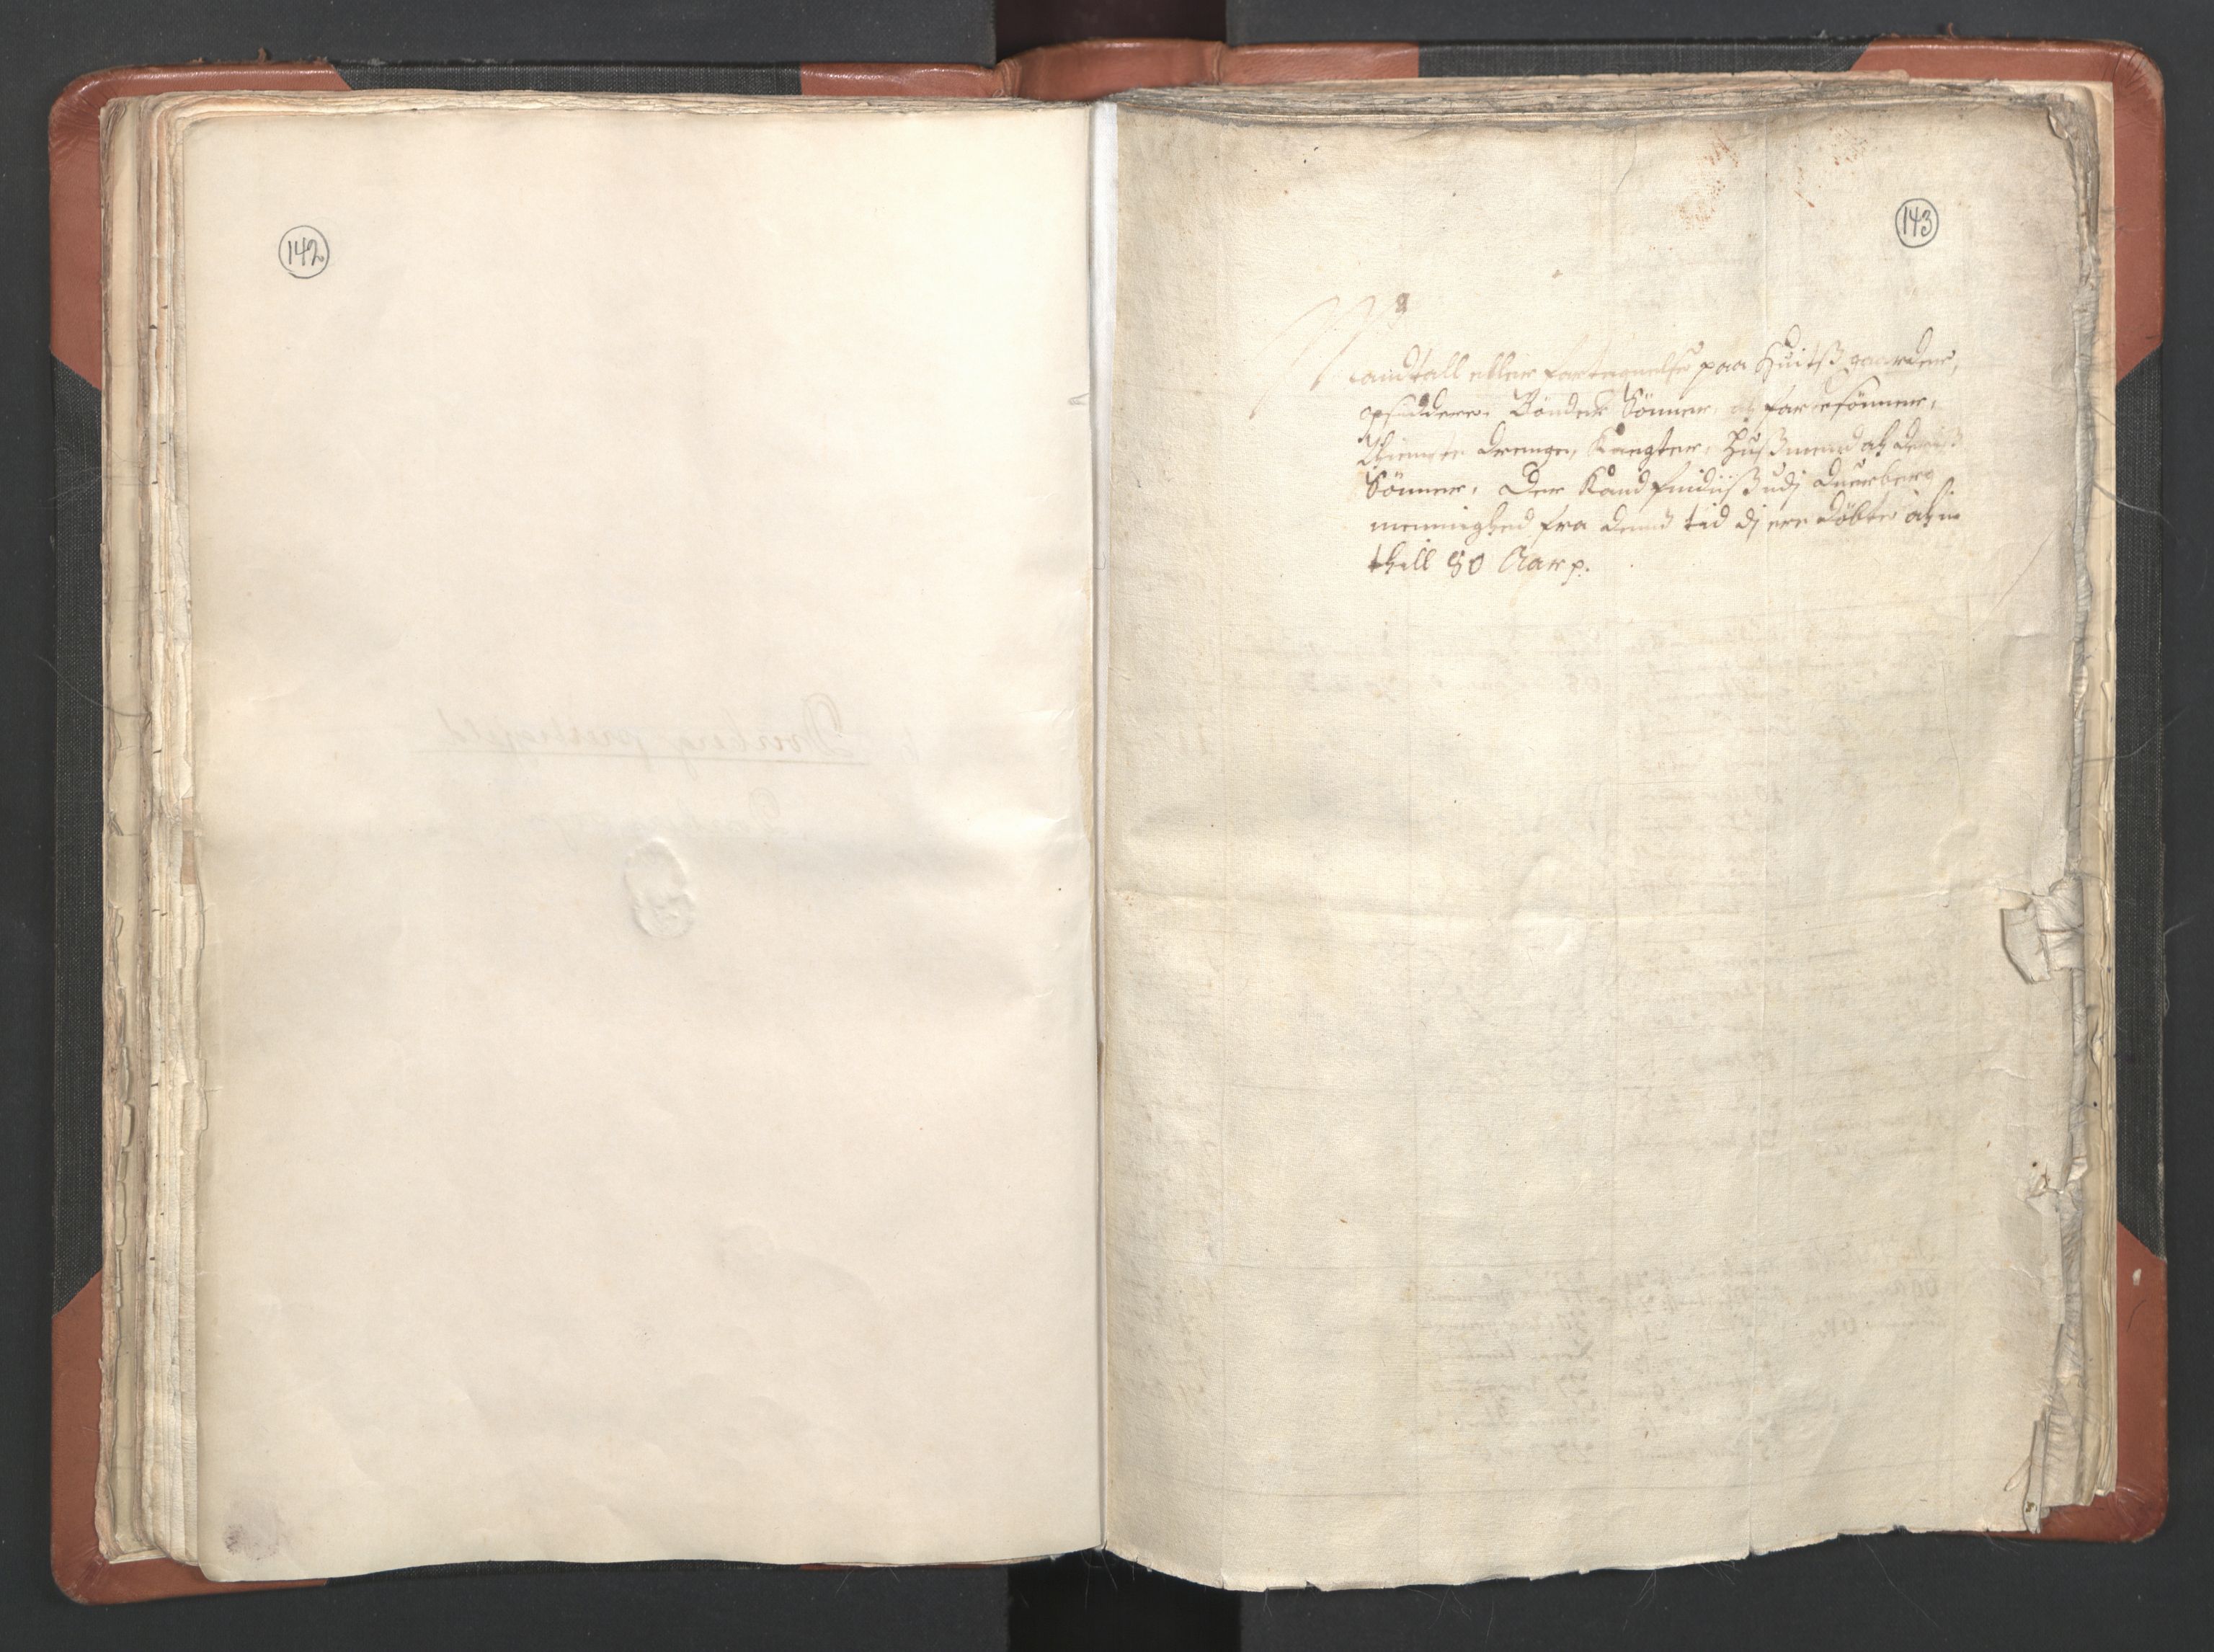 RA, Vicar's Census 1664-1666, no. 36: Lofoten and Vesterålen deanery, Senja deanery and Troms deanery, 1664-1666, p. 142-143